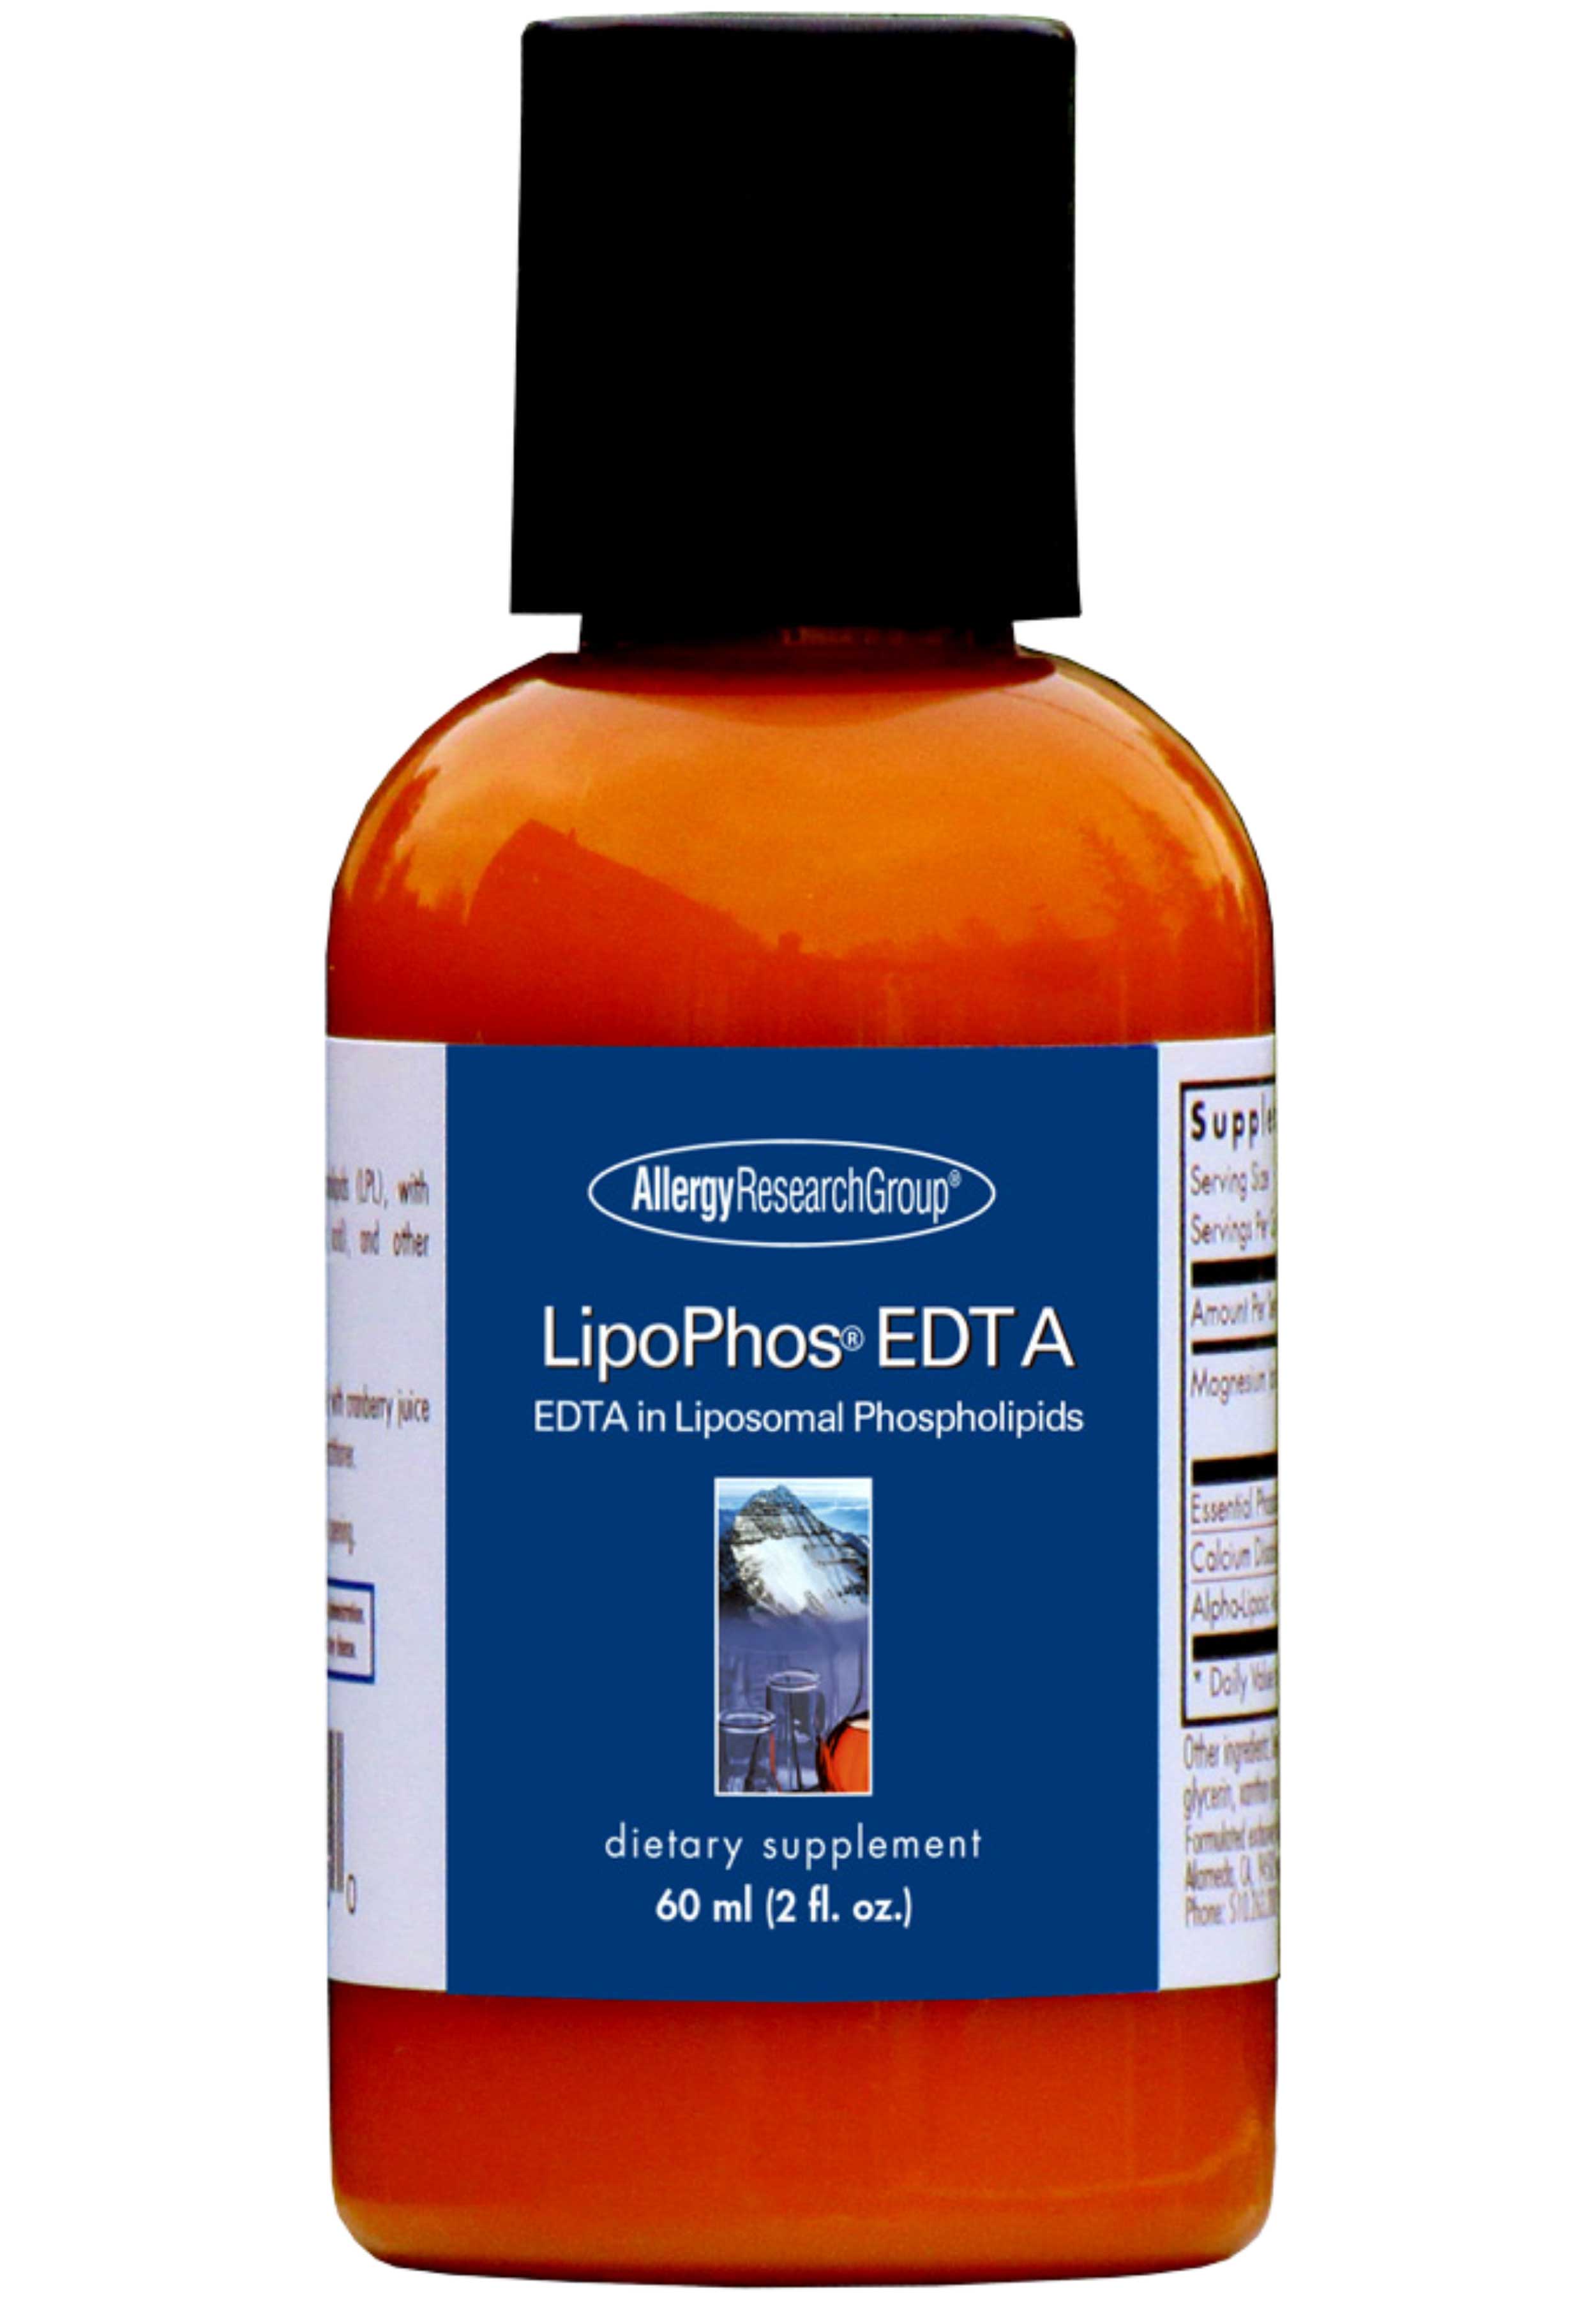 Allergy Research Group LipoPhos EDTA